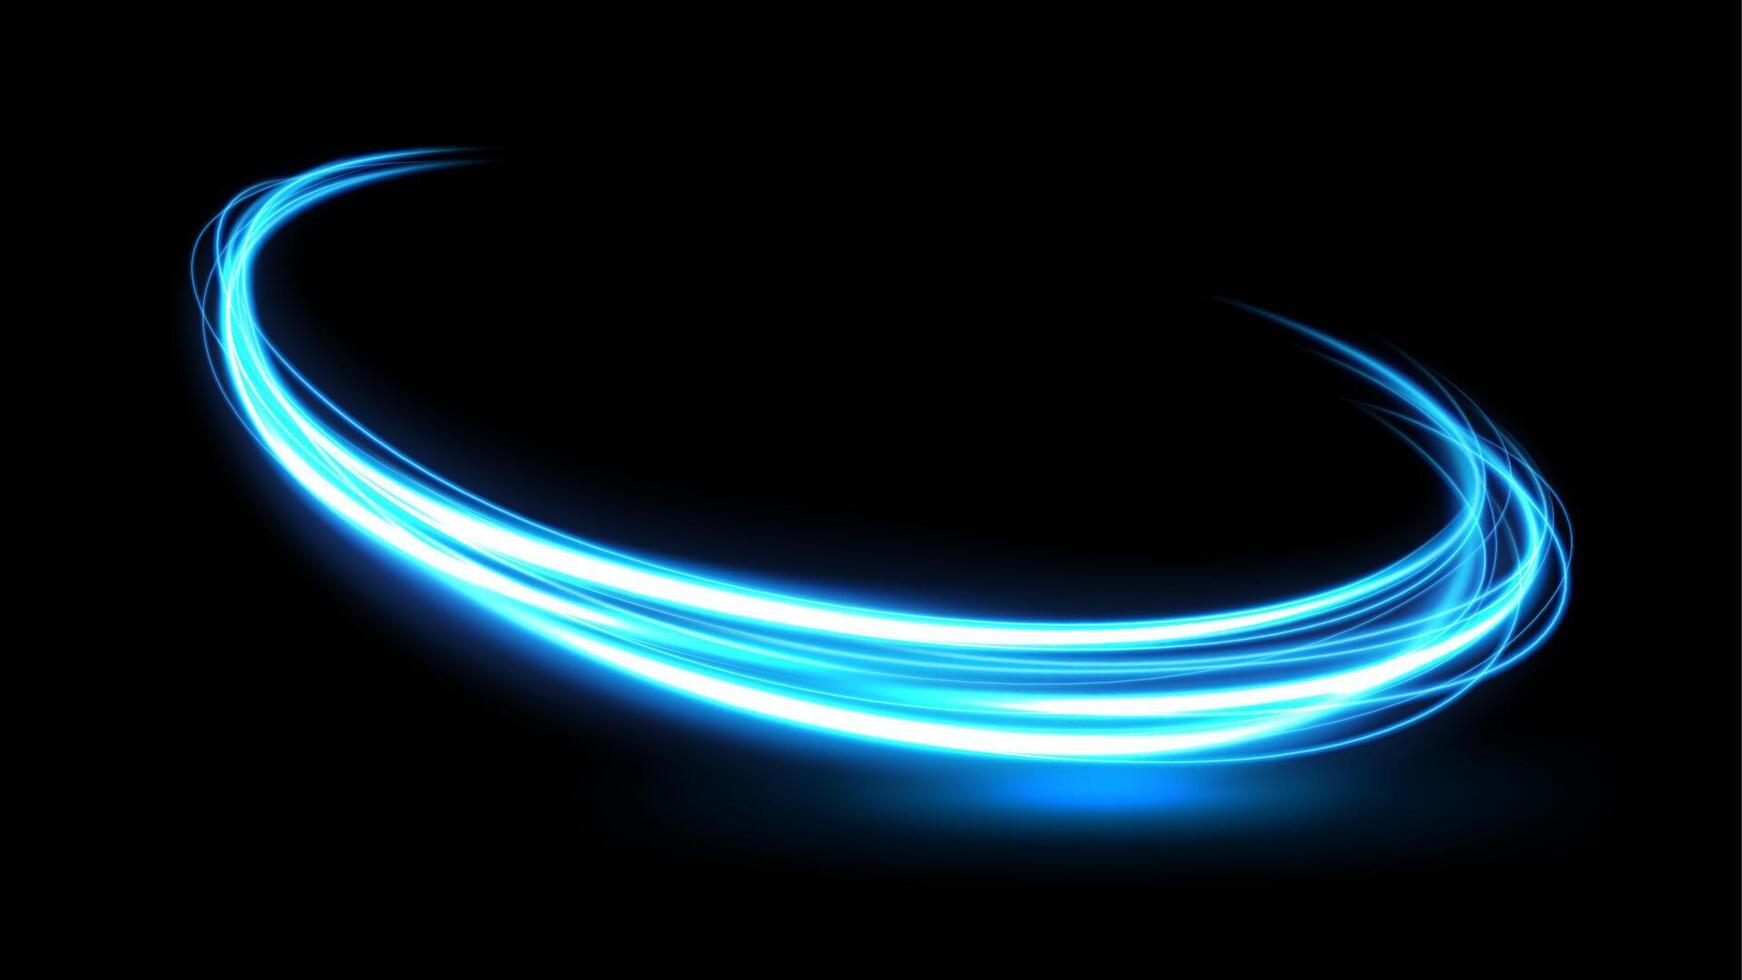 Abstract Blue Wavy Line of Light on Dark Background, Vector Illustration